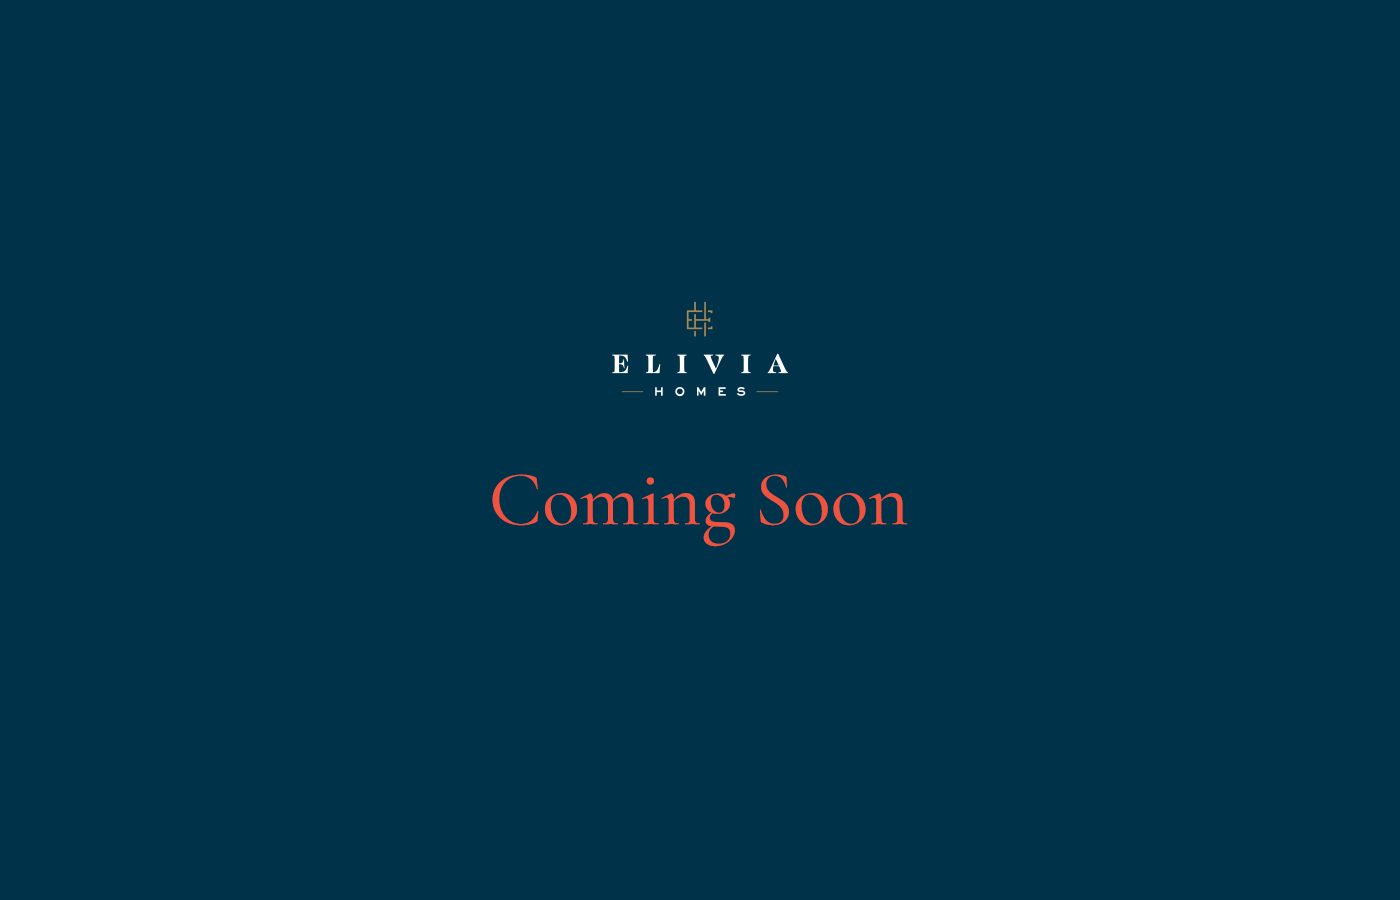 Elivia Homes coming soon